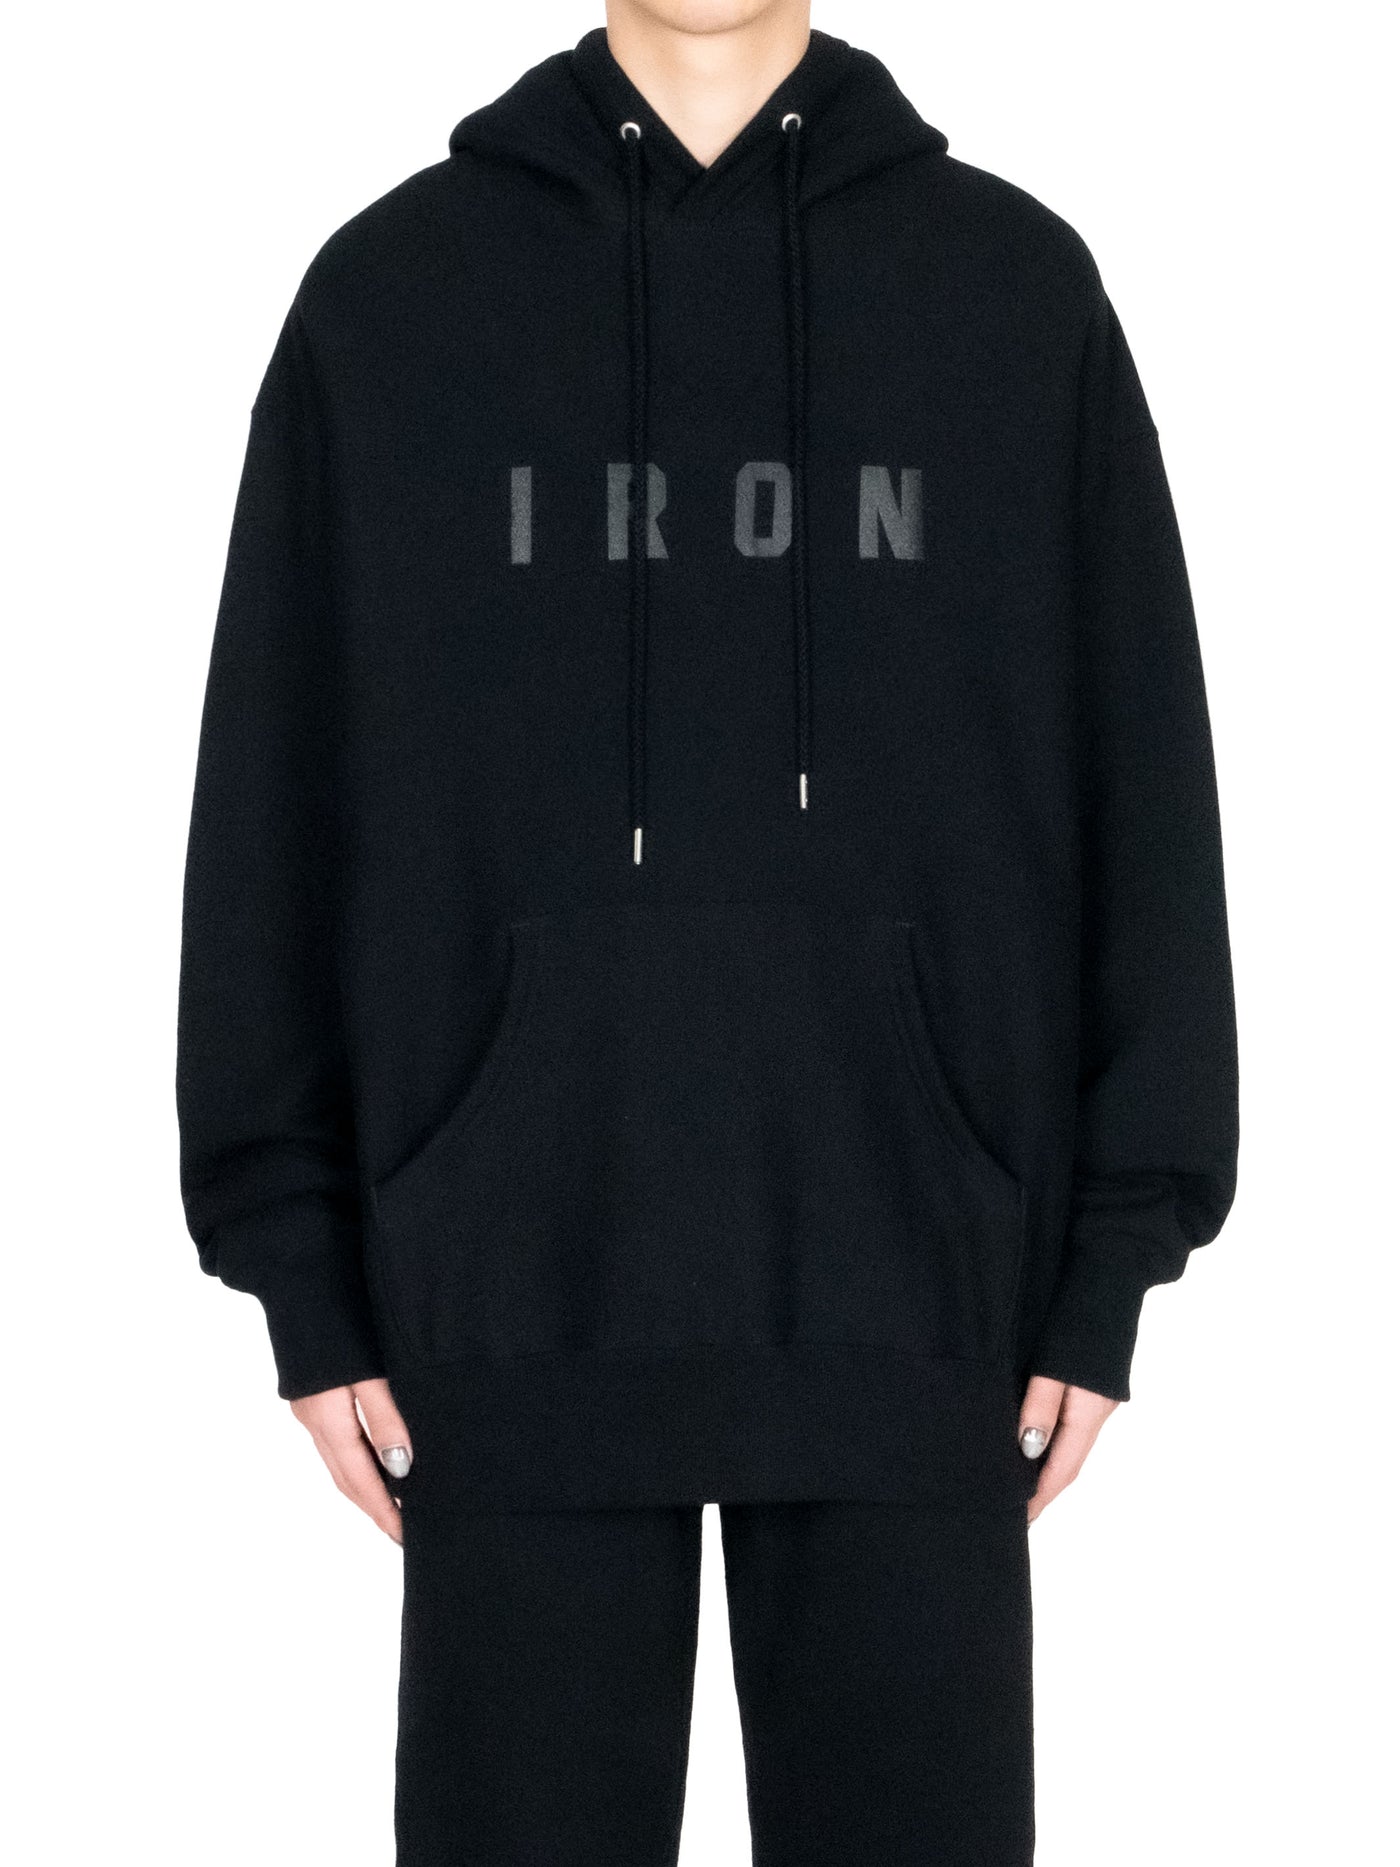 "IRON" sweat hoodie